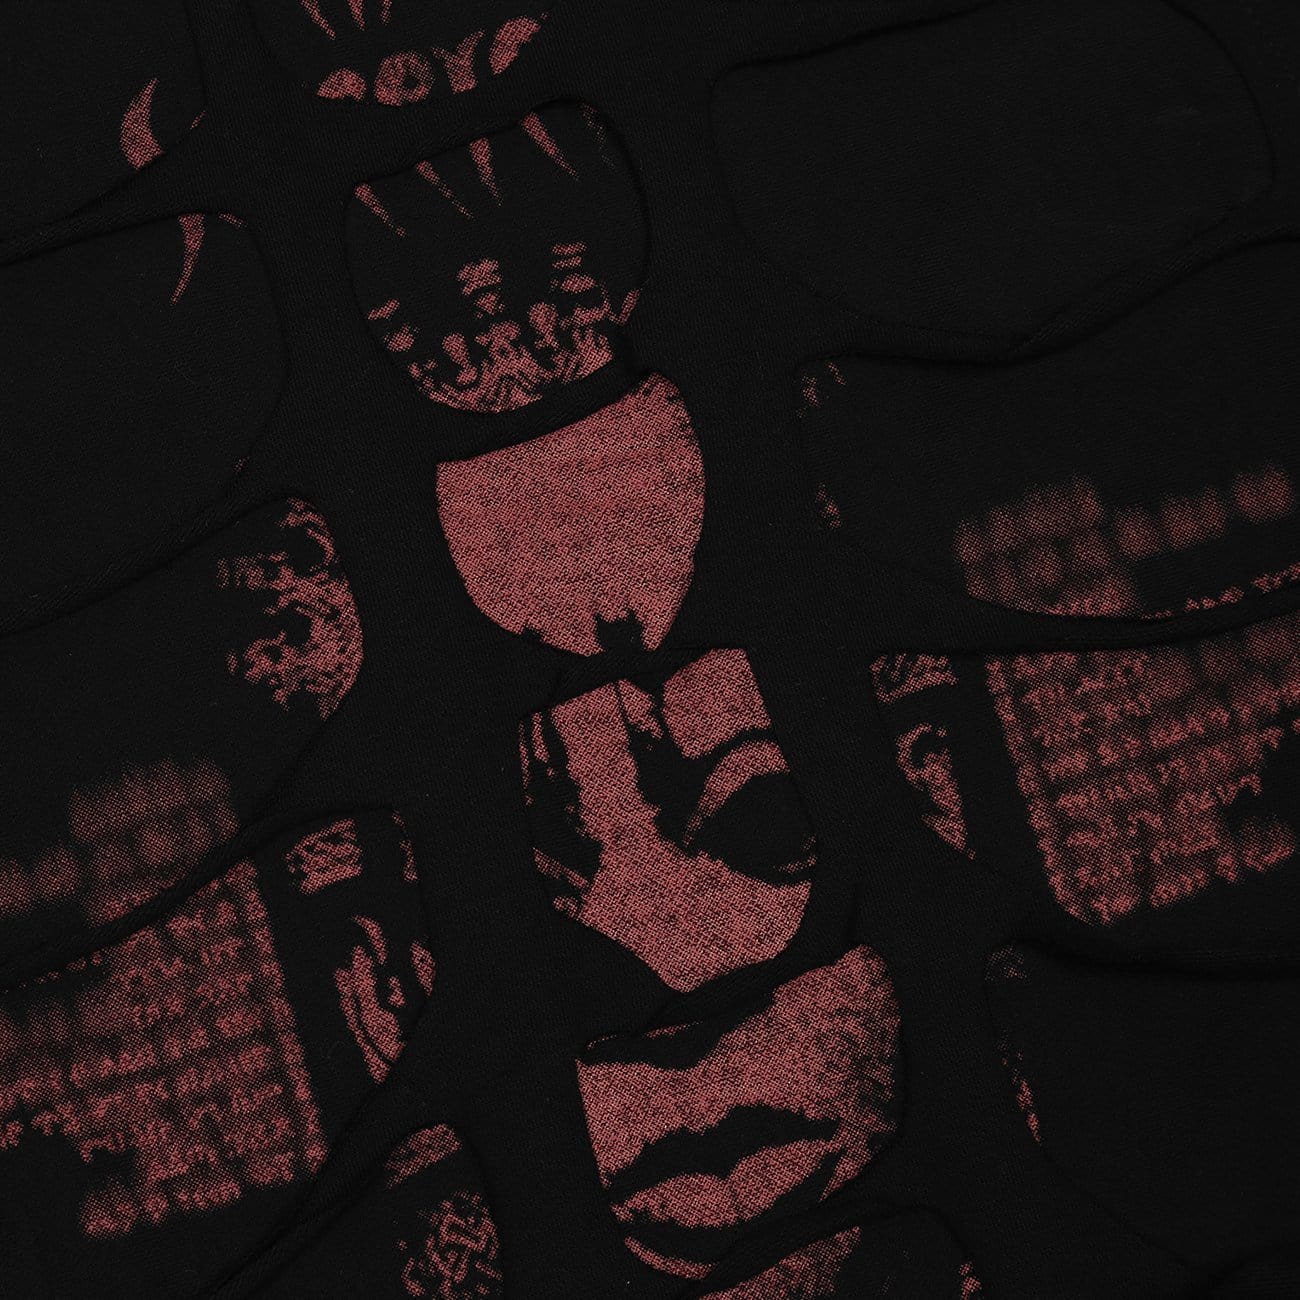 Dark Skull Human Face Print Oversized Sweatshirt Streetwear Brand Techwear Combat Tactical YUGEN THEORY